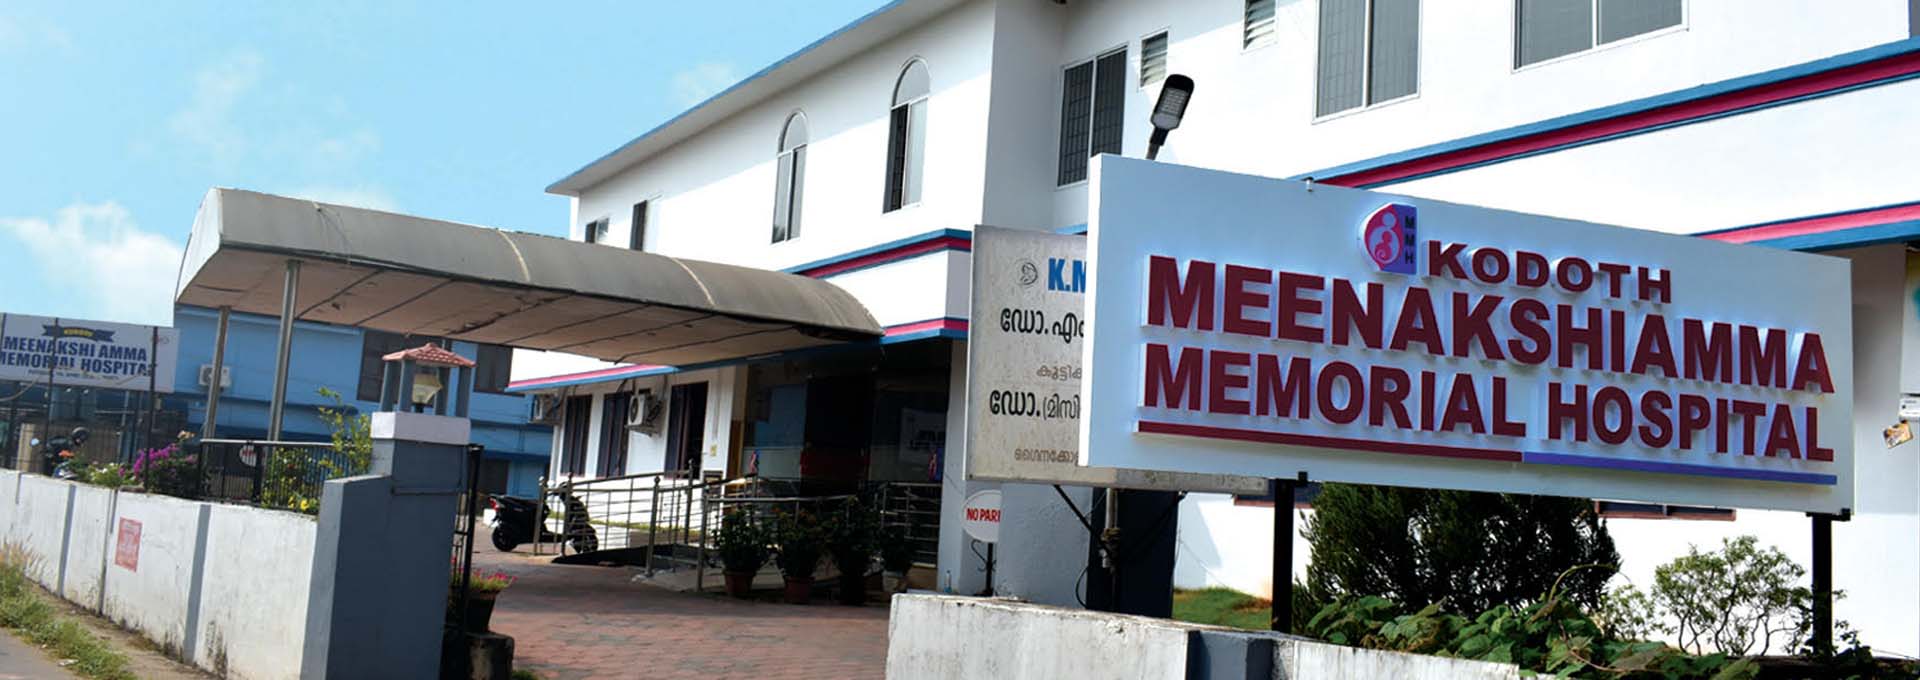 Kodoth Meenakshiamma Memorial hospital